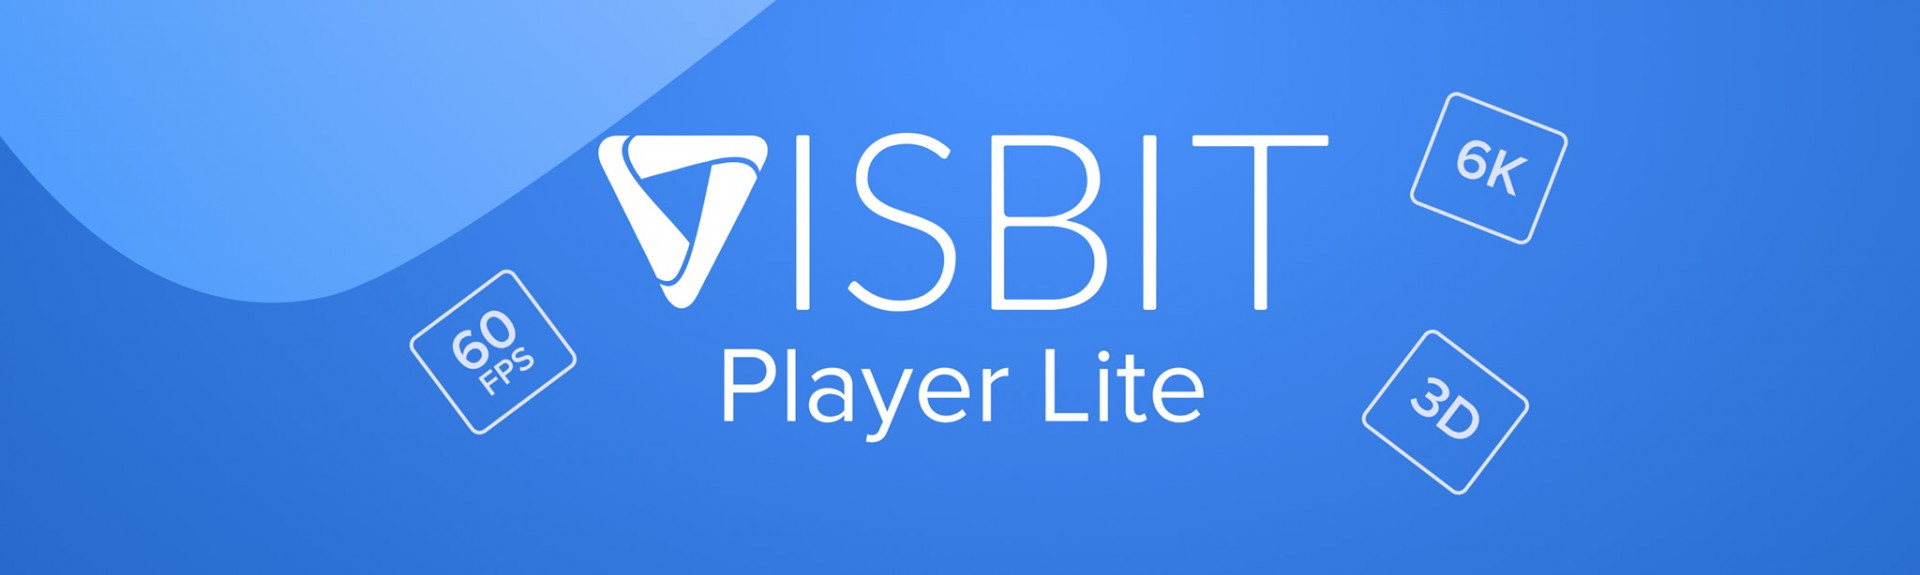 Visbit Player Lite